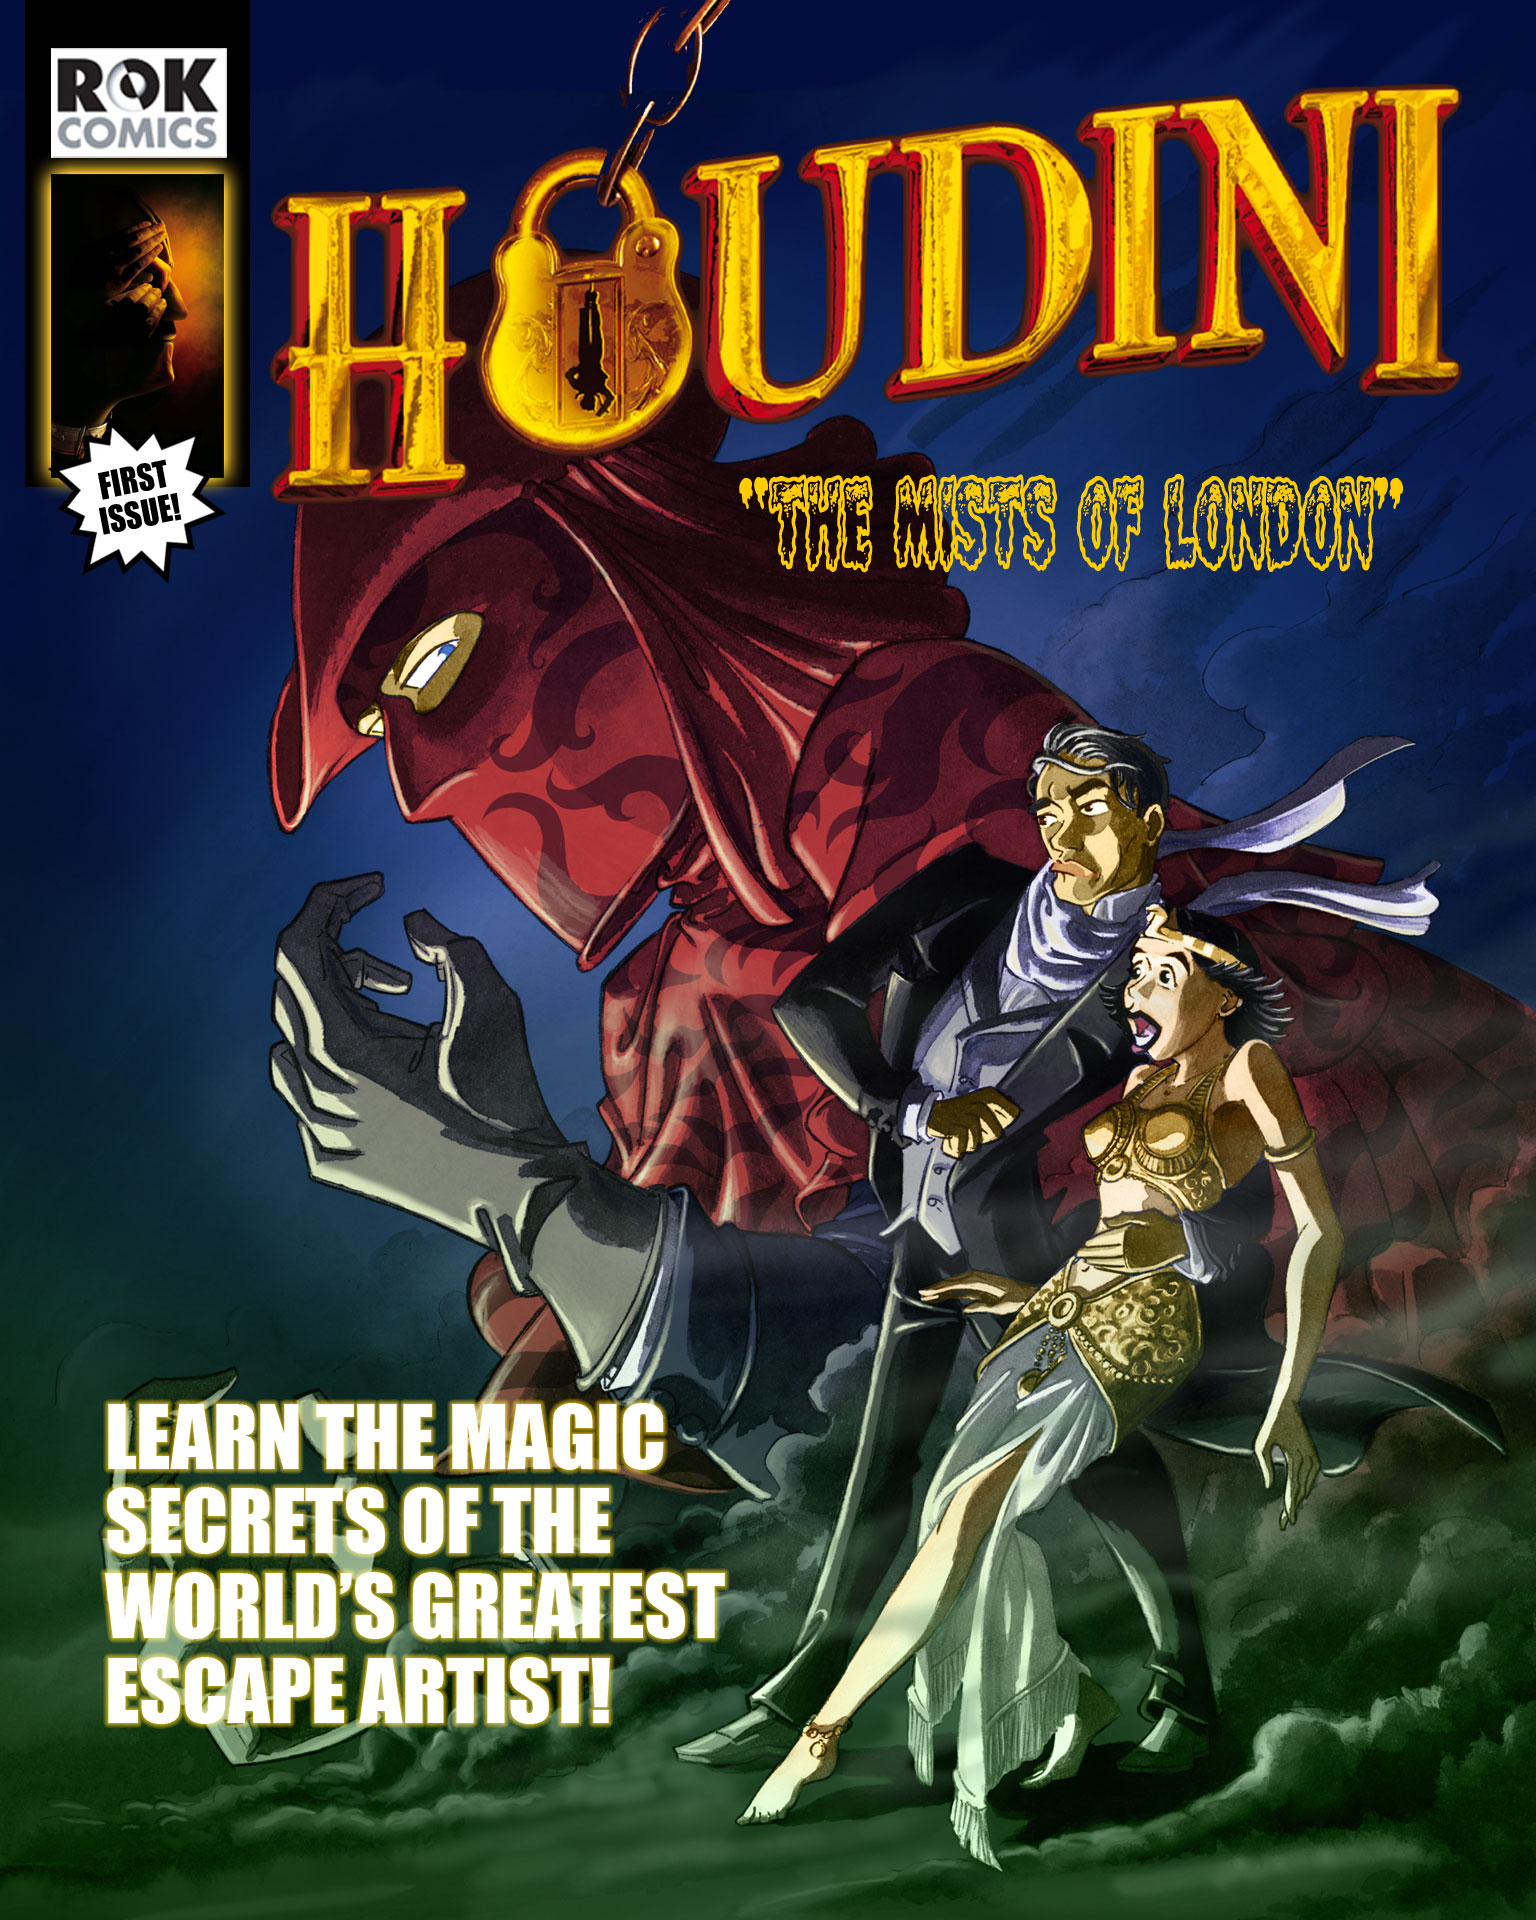 ROK Comics digital audio comic title "Houdini Adventures"